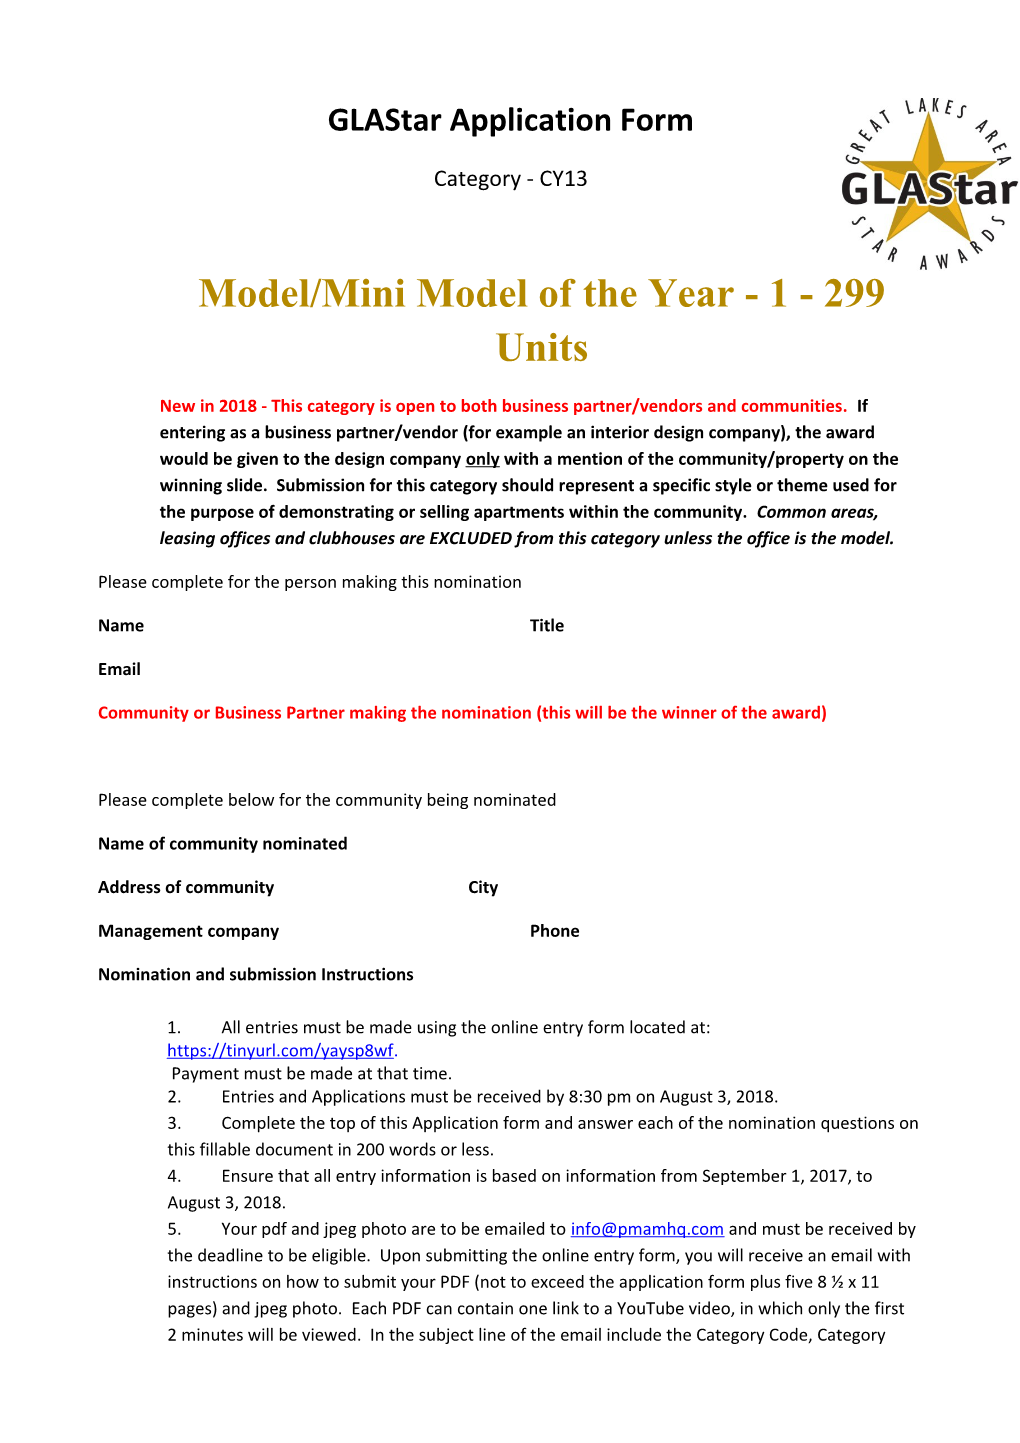 Model/Mini Model of the Year - 1 - 299 Units